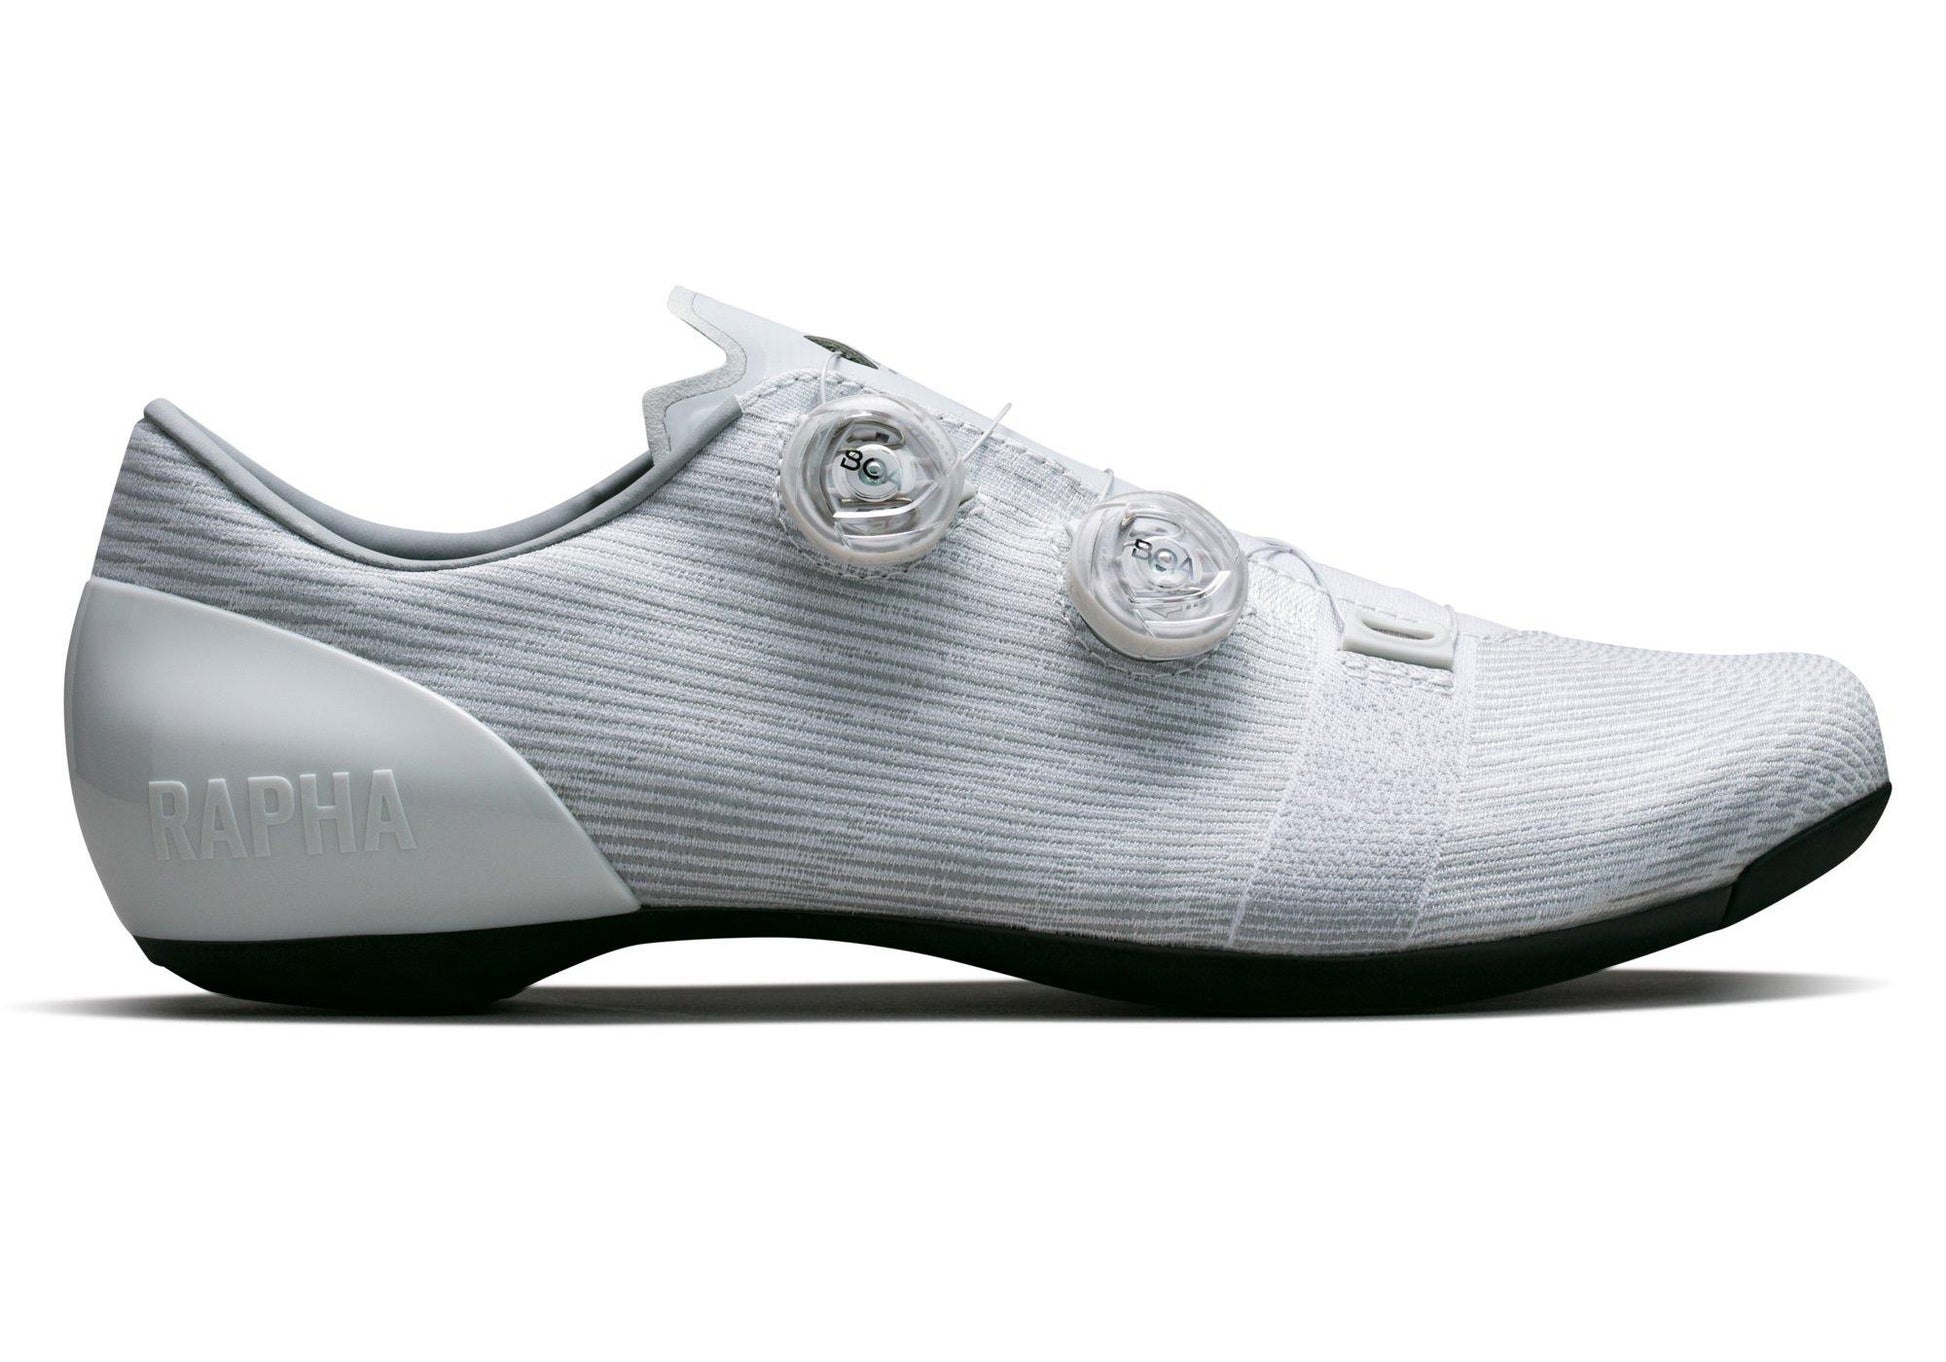 Rapha Pro Team Mens Road Shoes, Light Grey